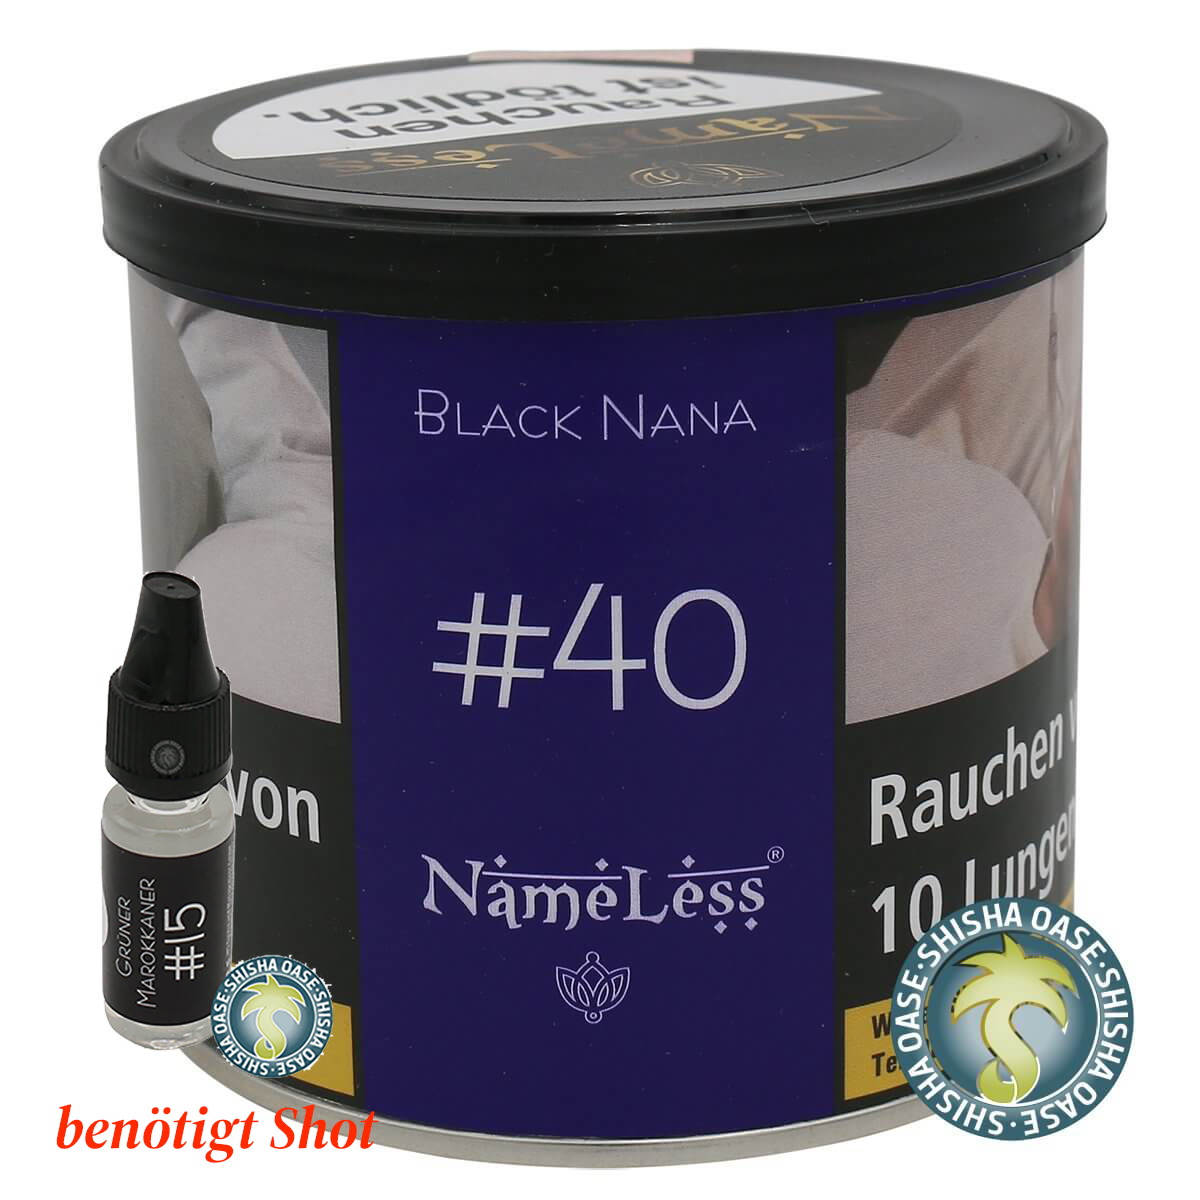 Nameless Tabak #40 Black Nana Shoot me 200g